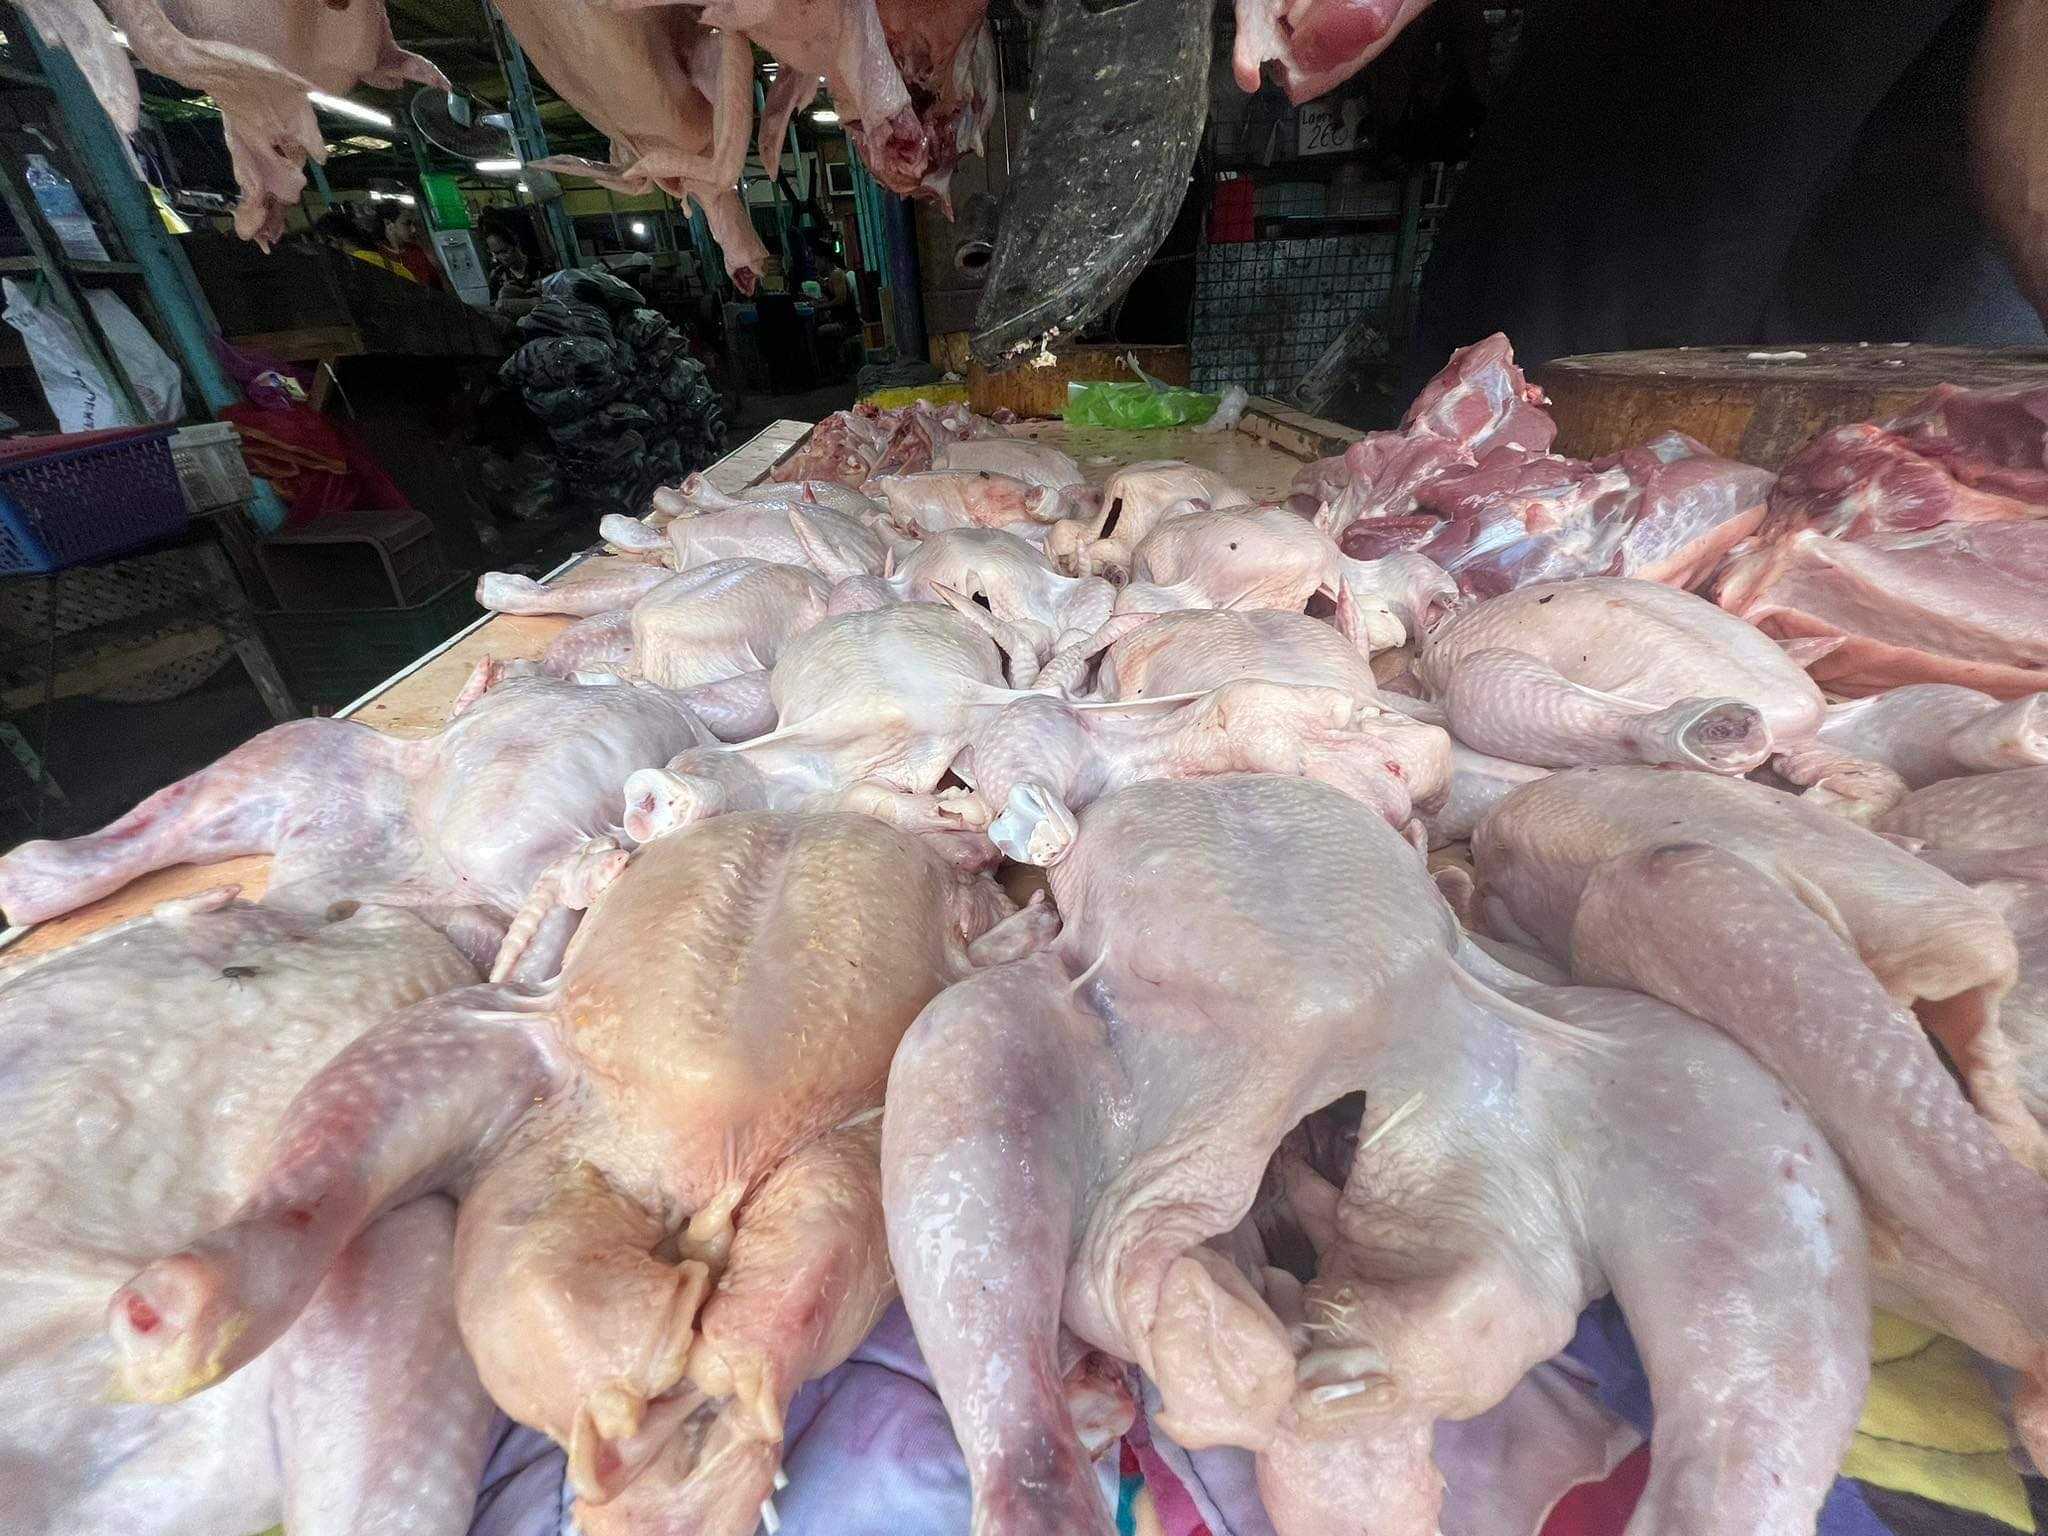 Temporary moratorium on chicken imports sought